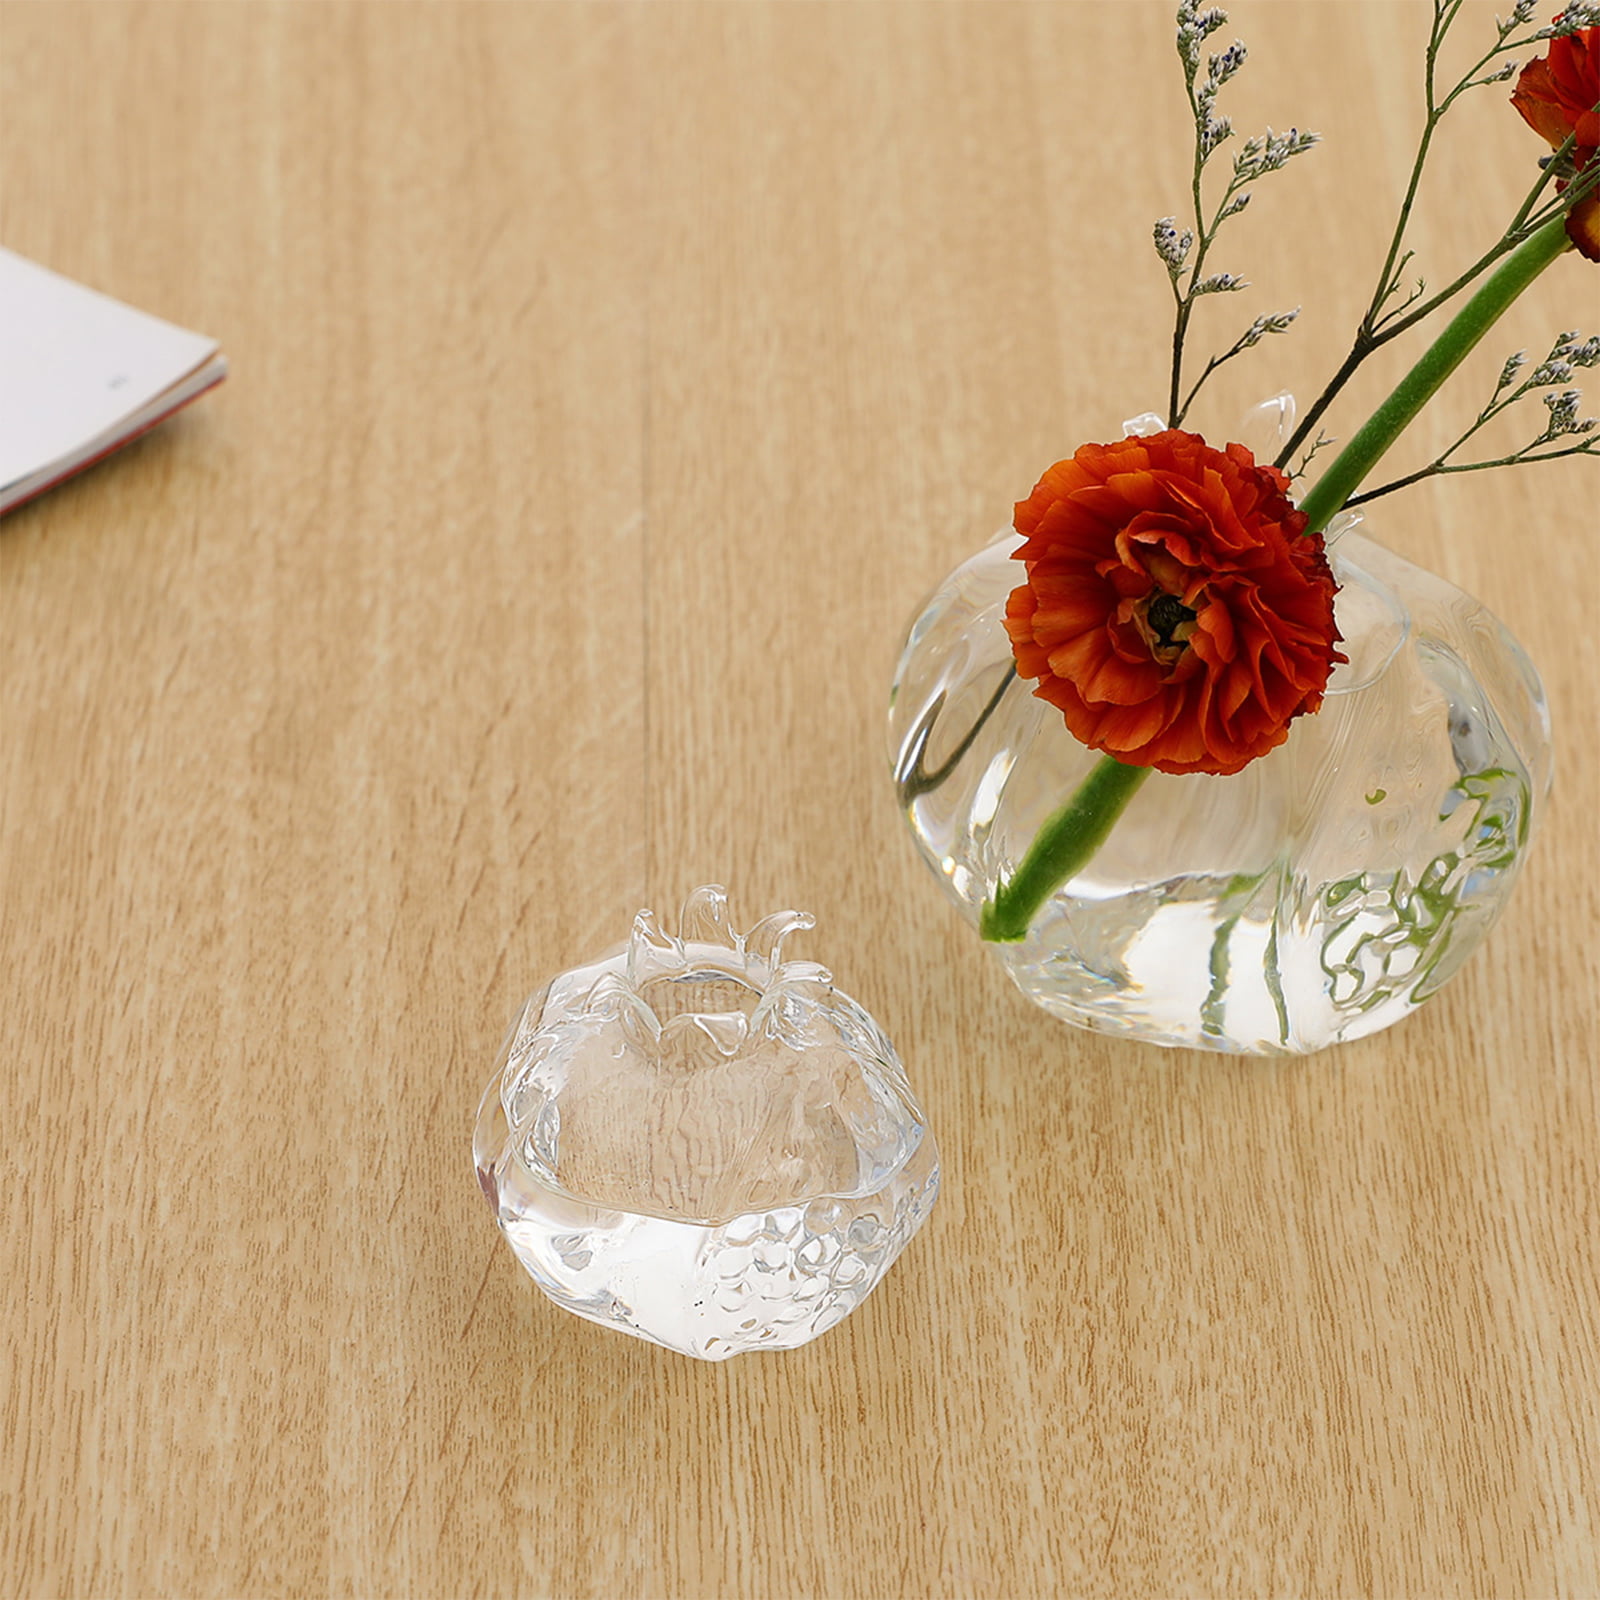 S/L Pomegranate Shape Tabletop Glass Planter Flower Vase Decorative Glass Bottle 